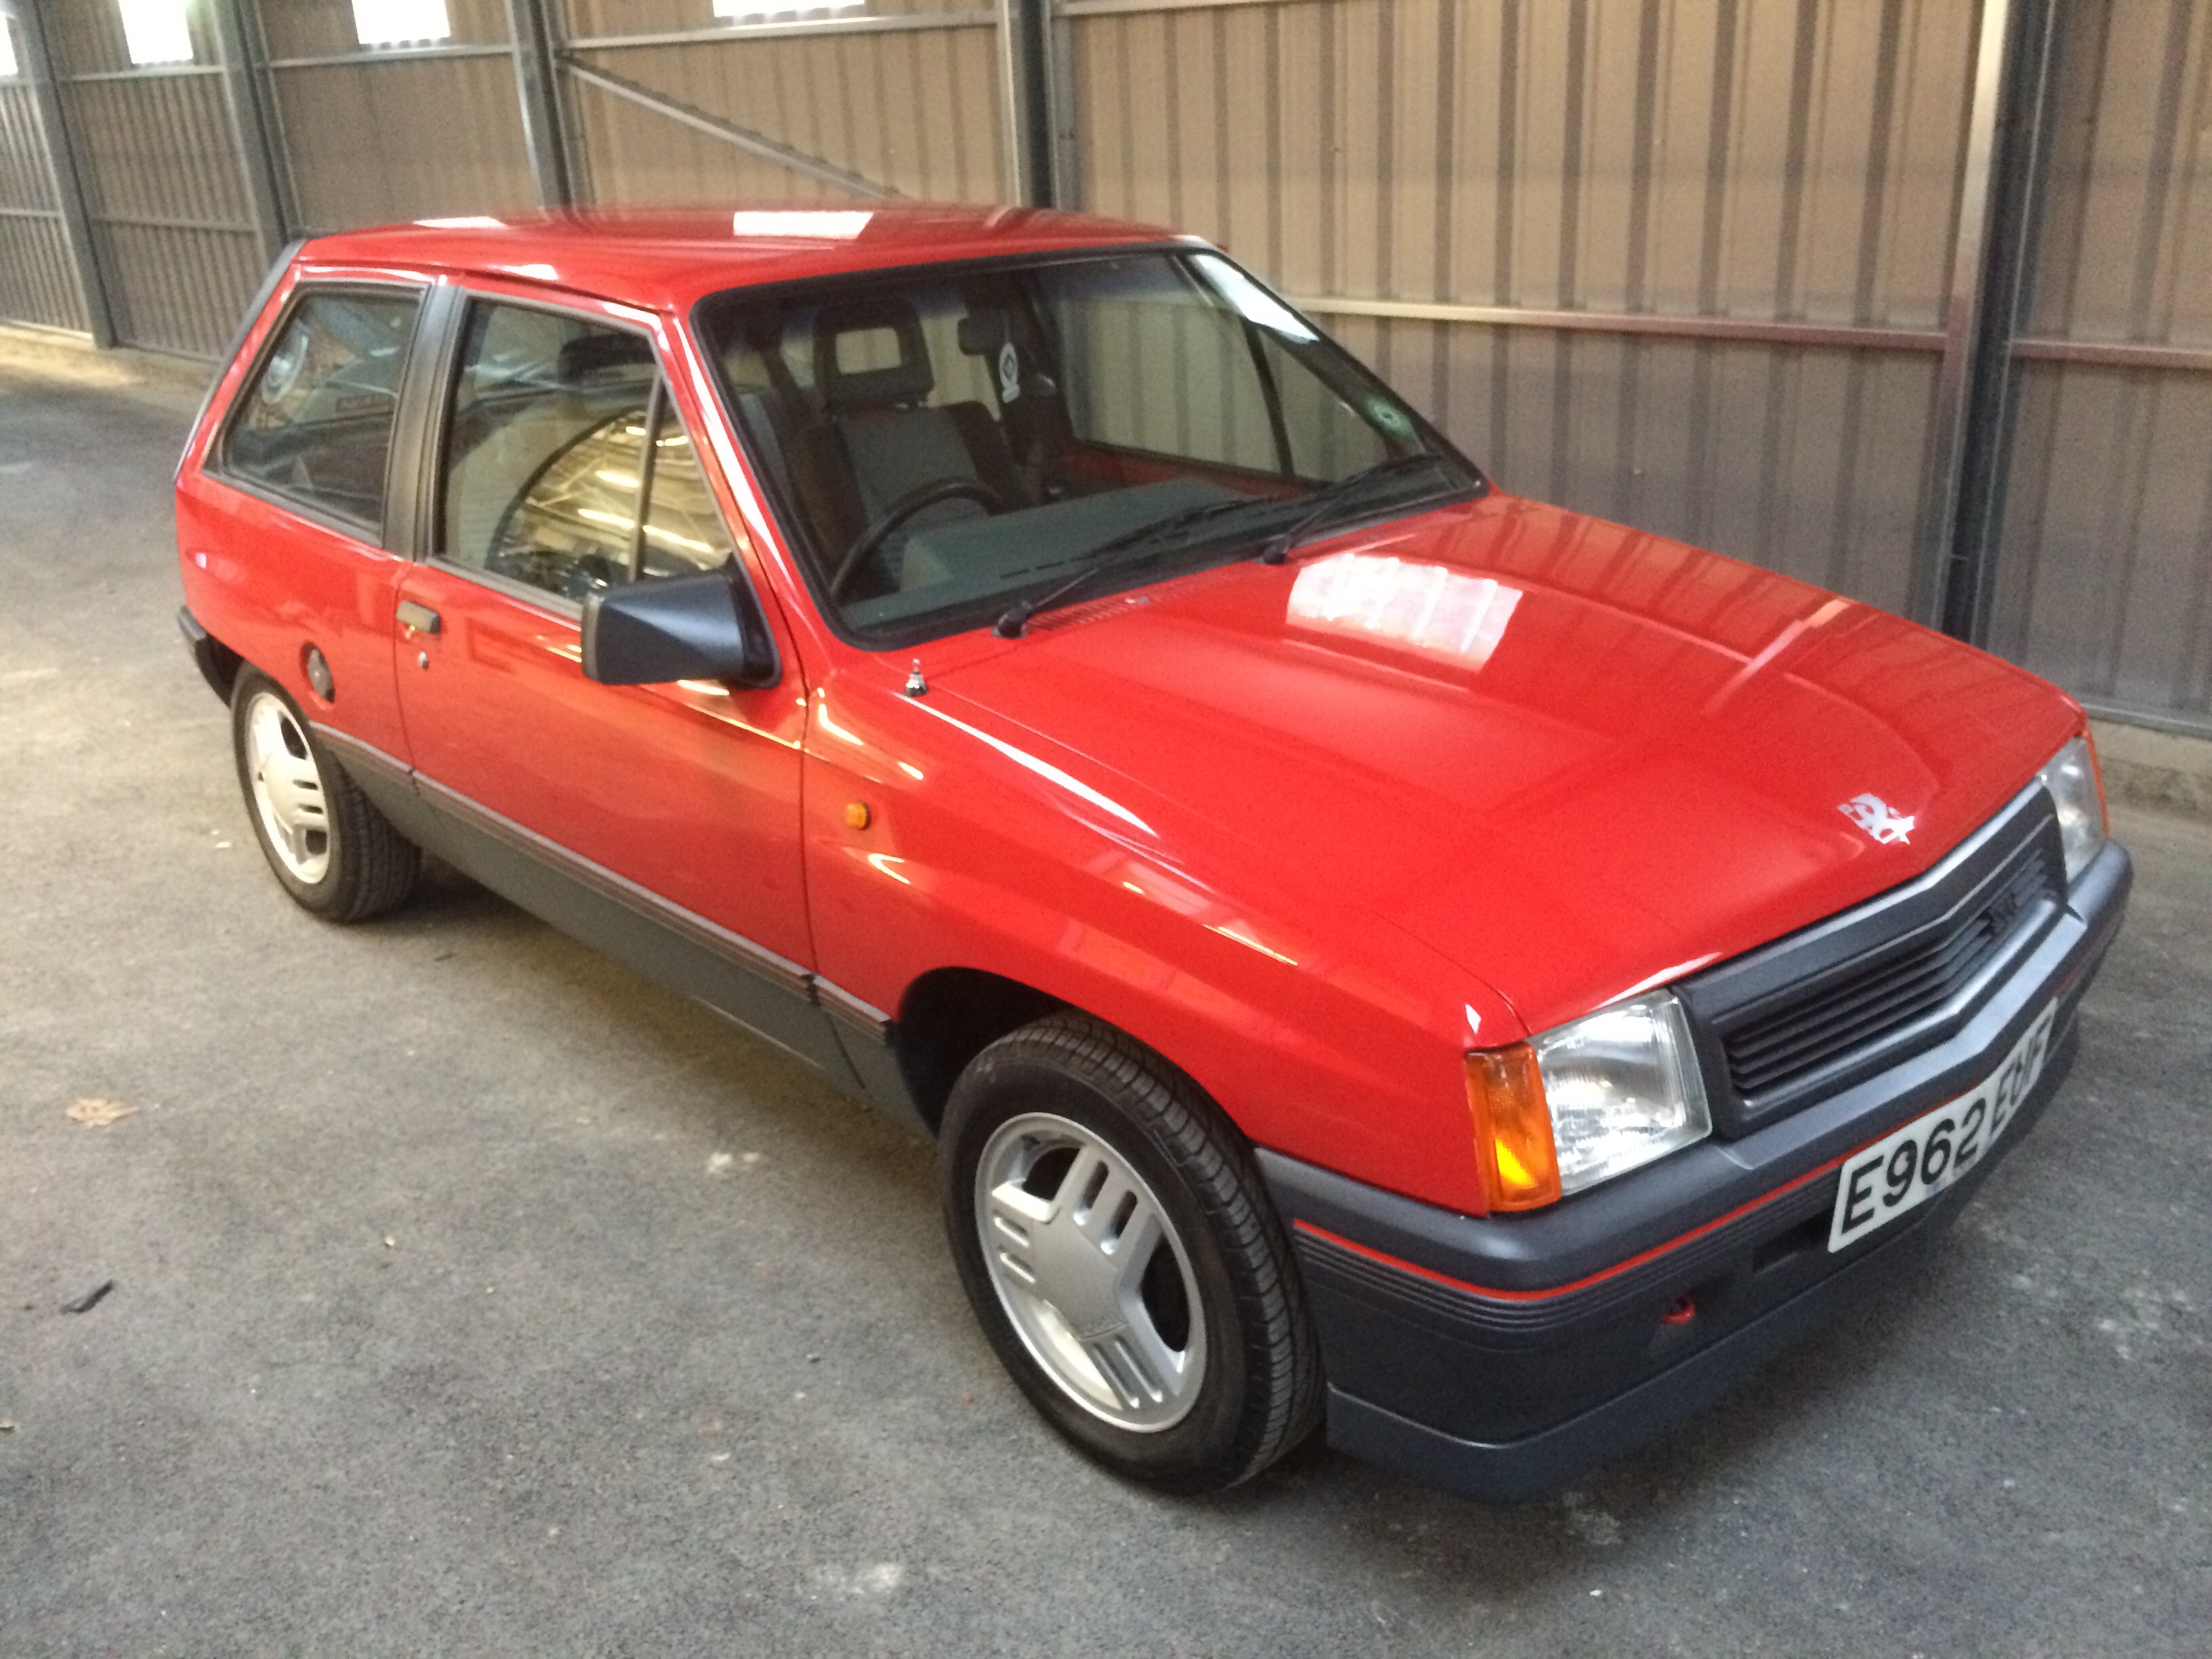 1988 Vauxhall Nova 1.3 SR